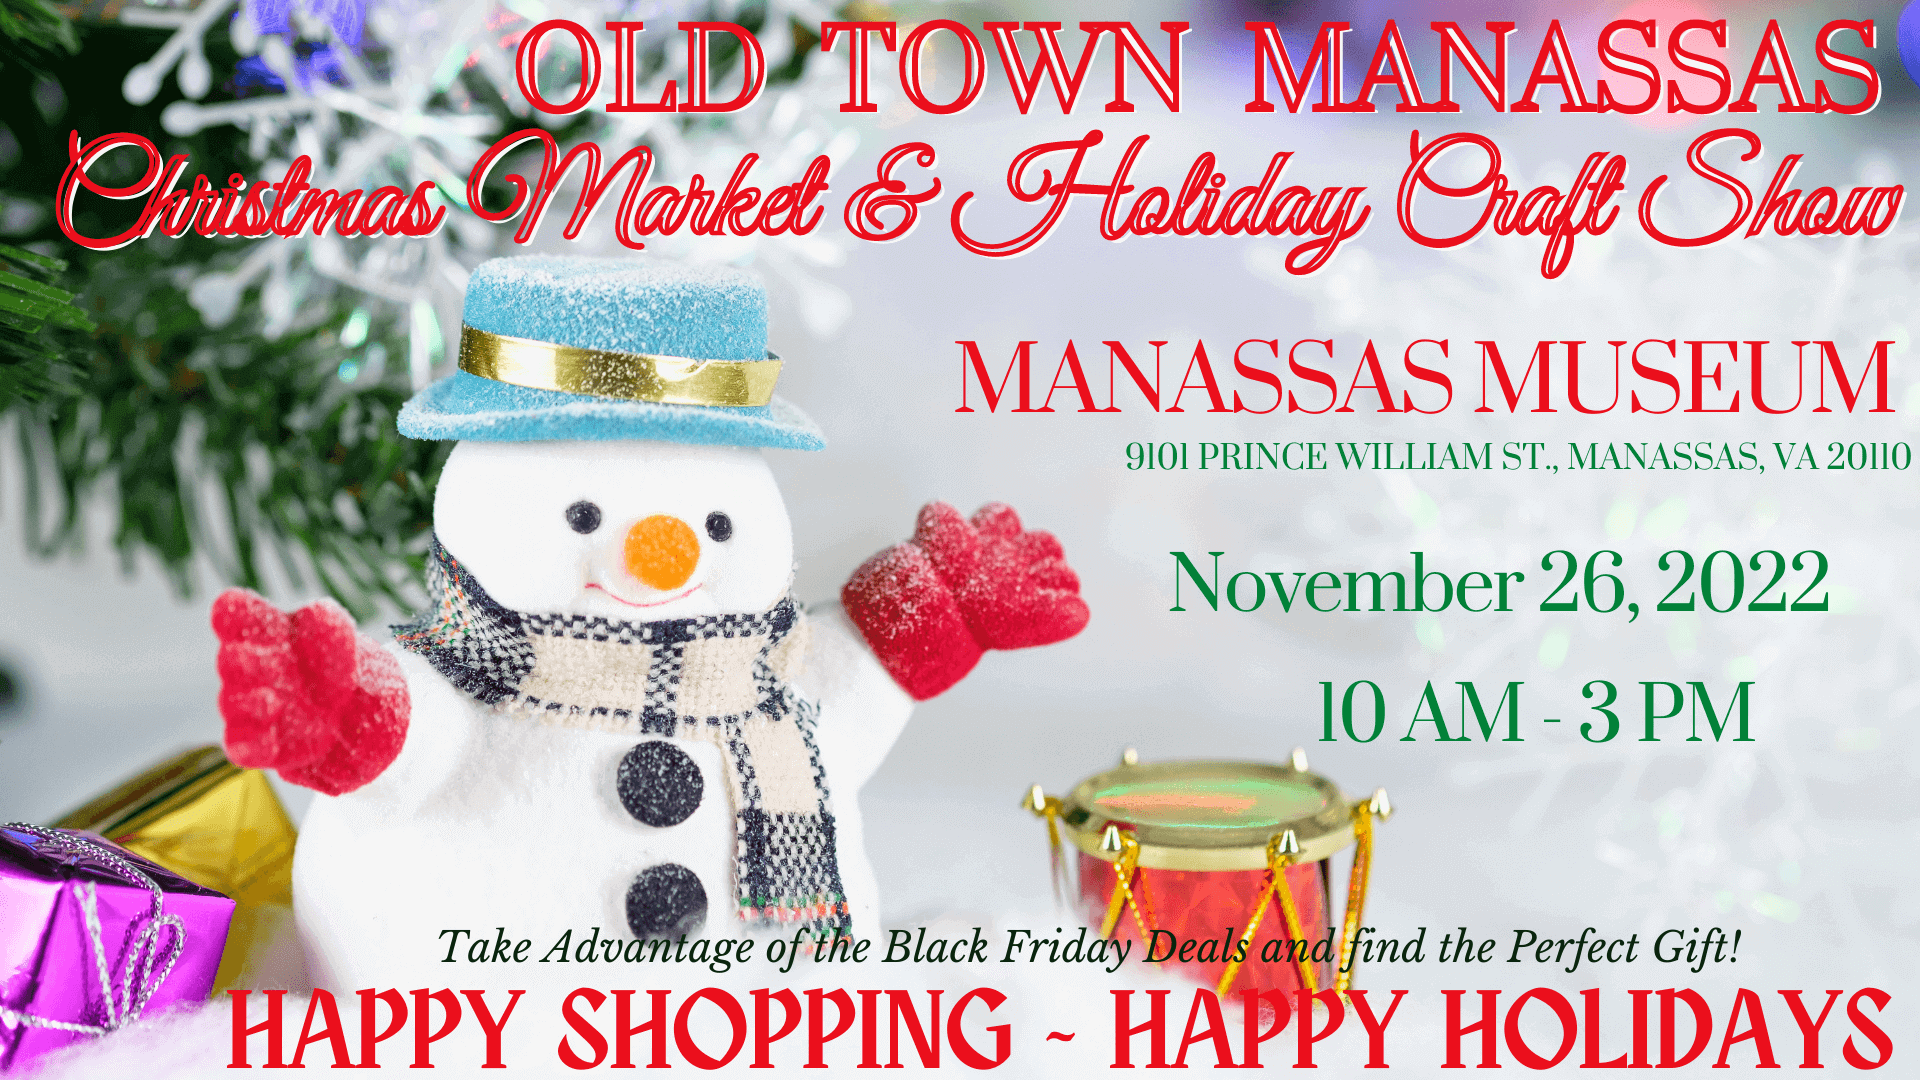 Old Town Manassas Christmas Fair and Holiday Craft Show Prince